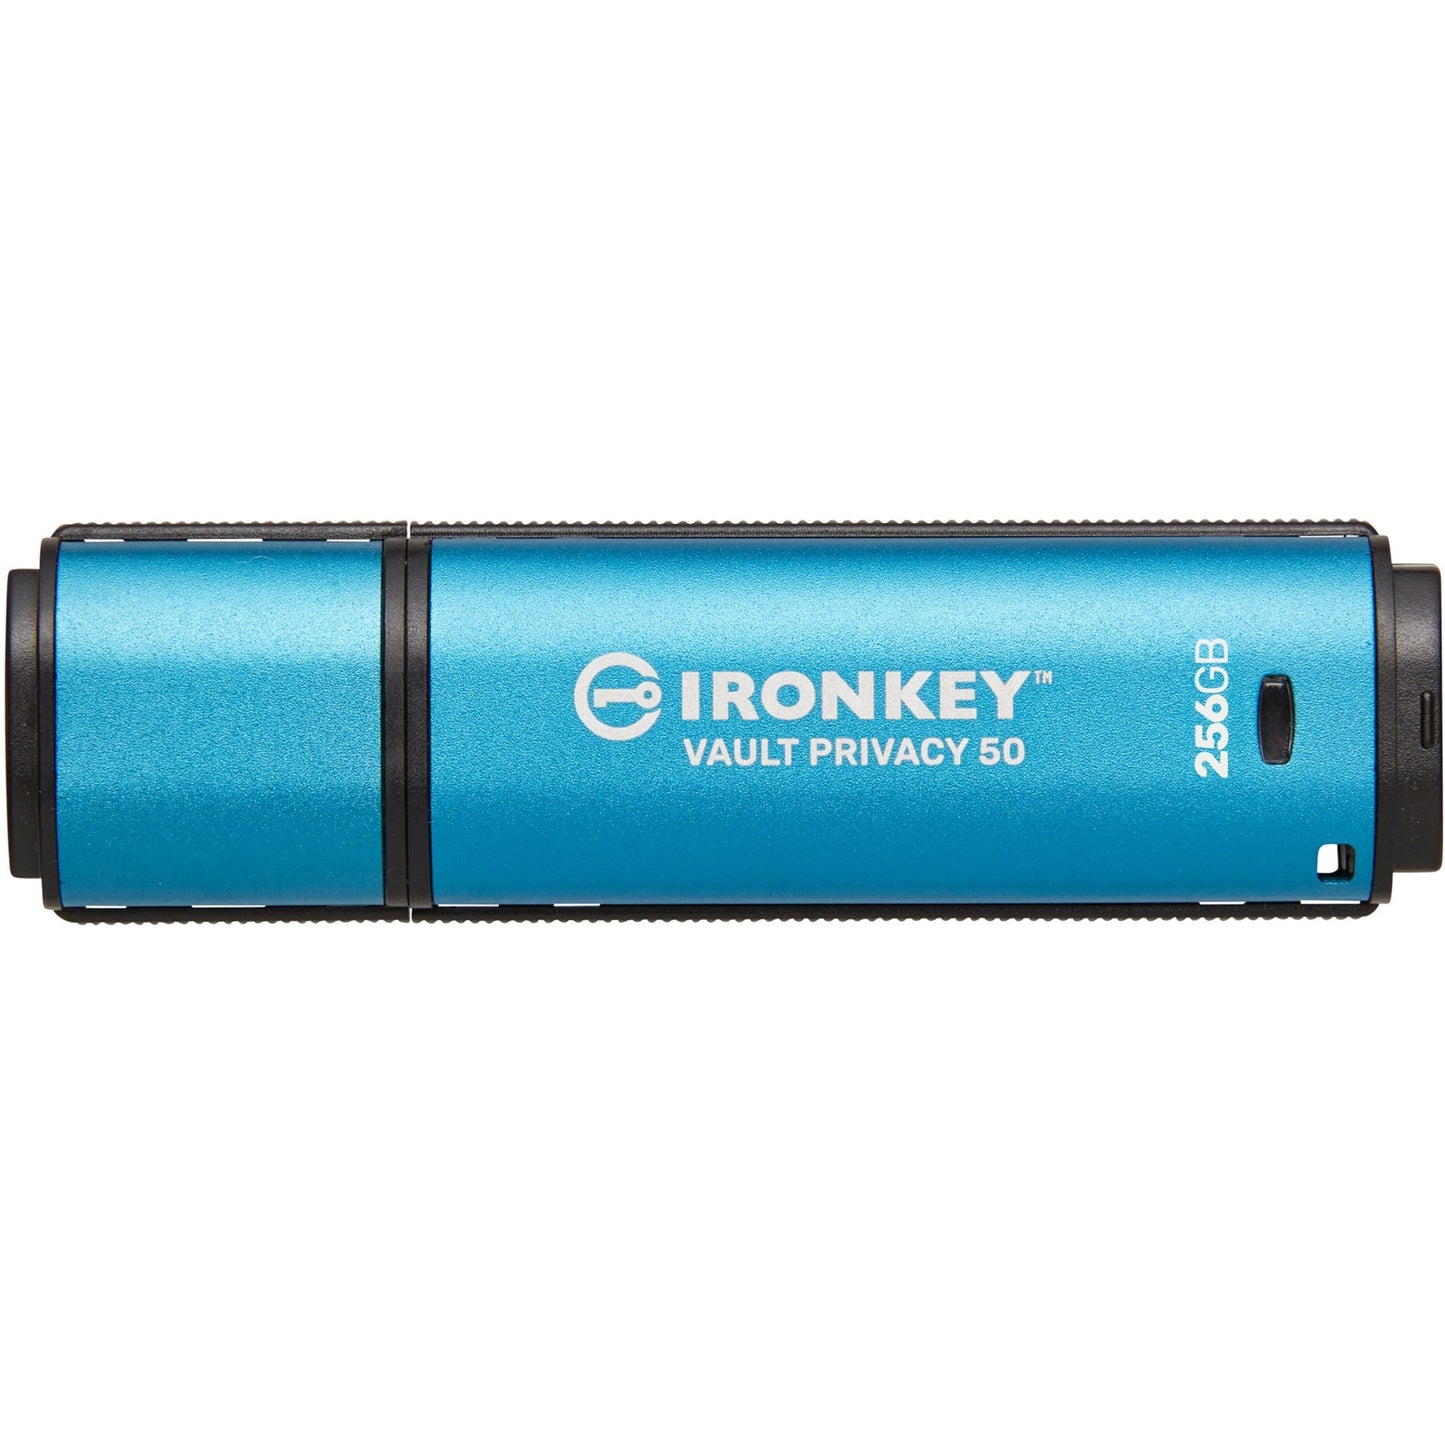 Kingston IronKey Vault Privacy 50 256 GB